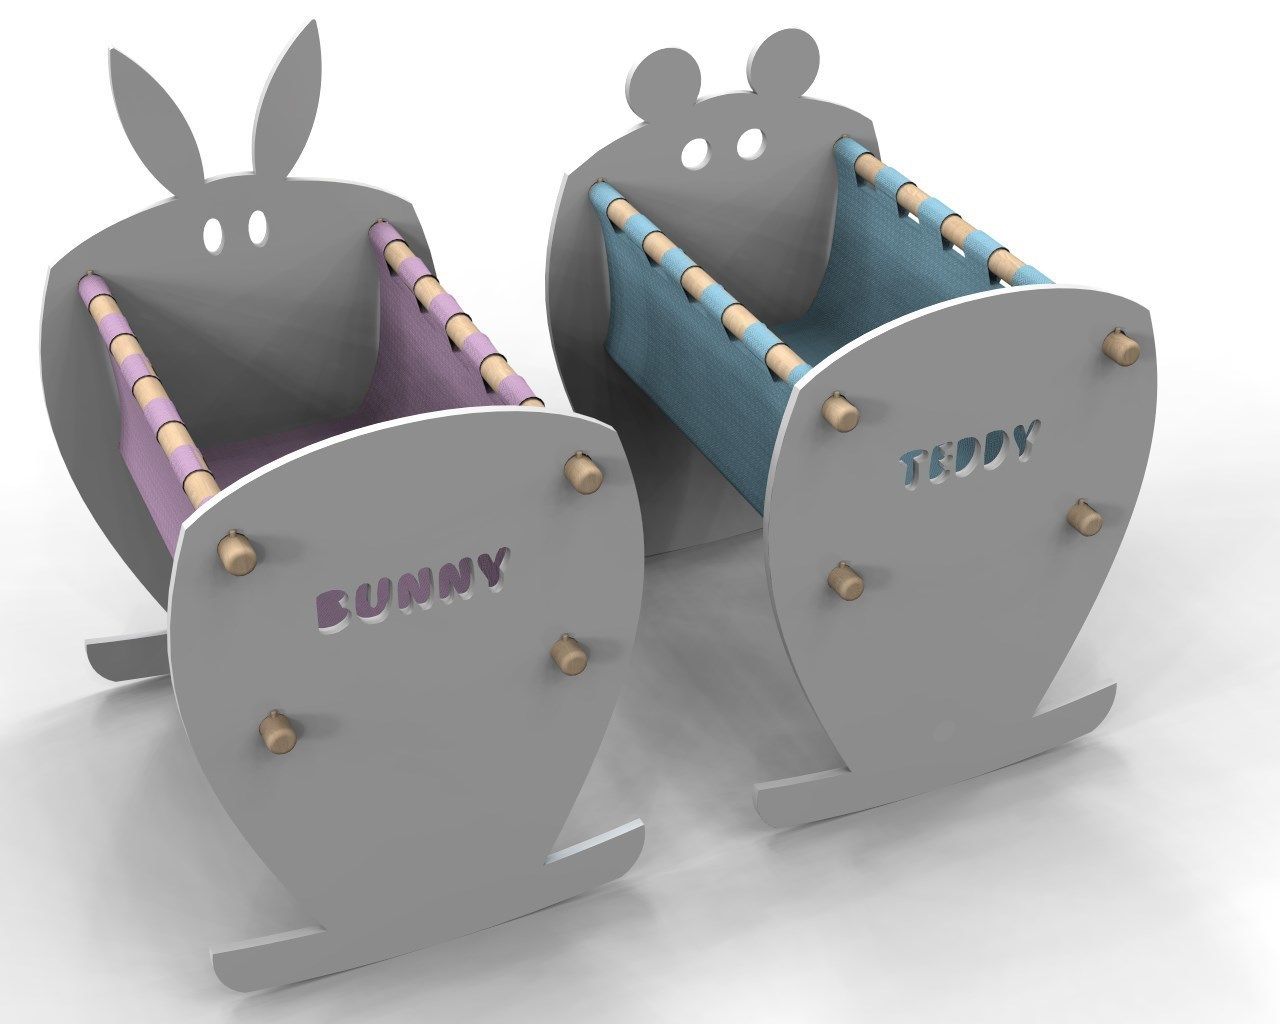 Teddy&Bunny, Nyda Design - Nicola D'Alessandro architetto Nyda Design - Nicola D'Alessandro architetto ห้องนอนเด็ก เตียงเด็กและเปลเด็ก